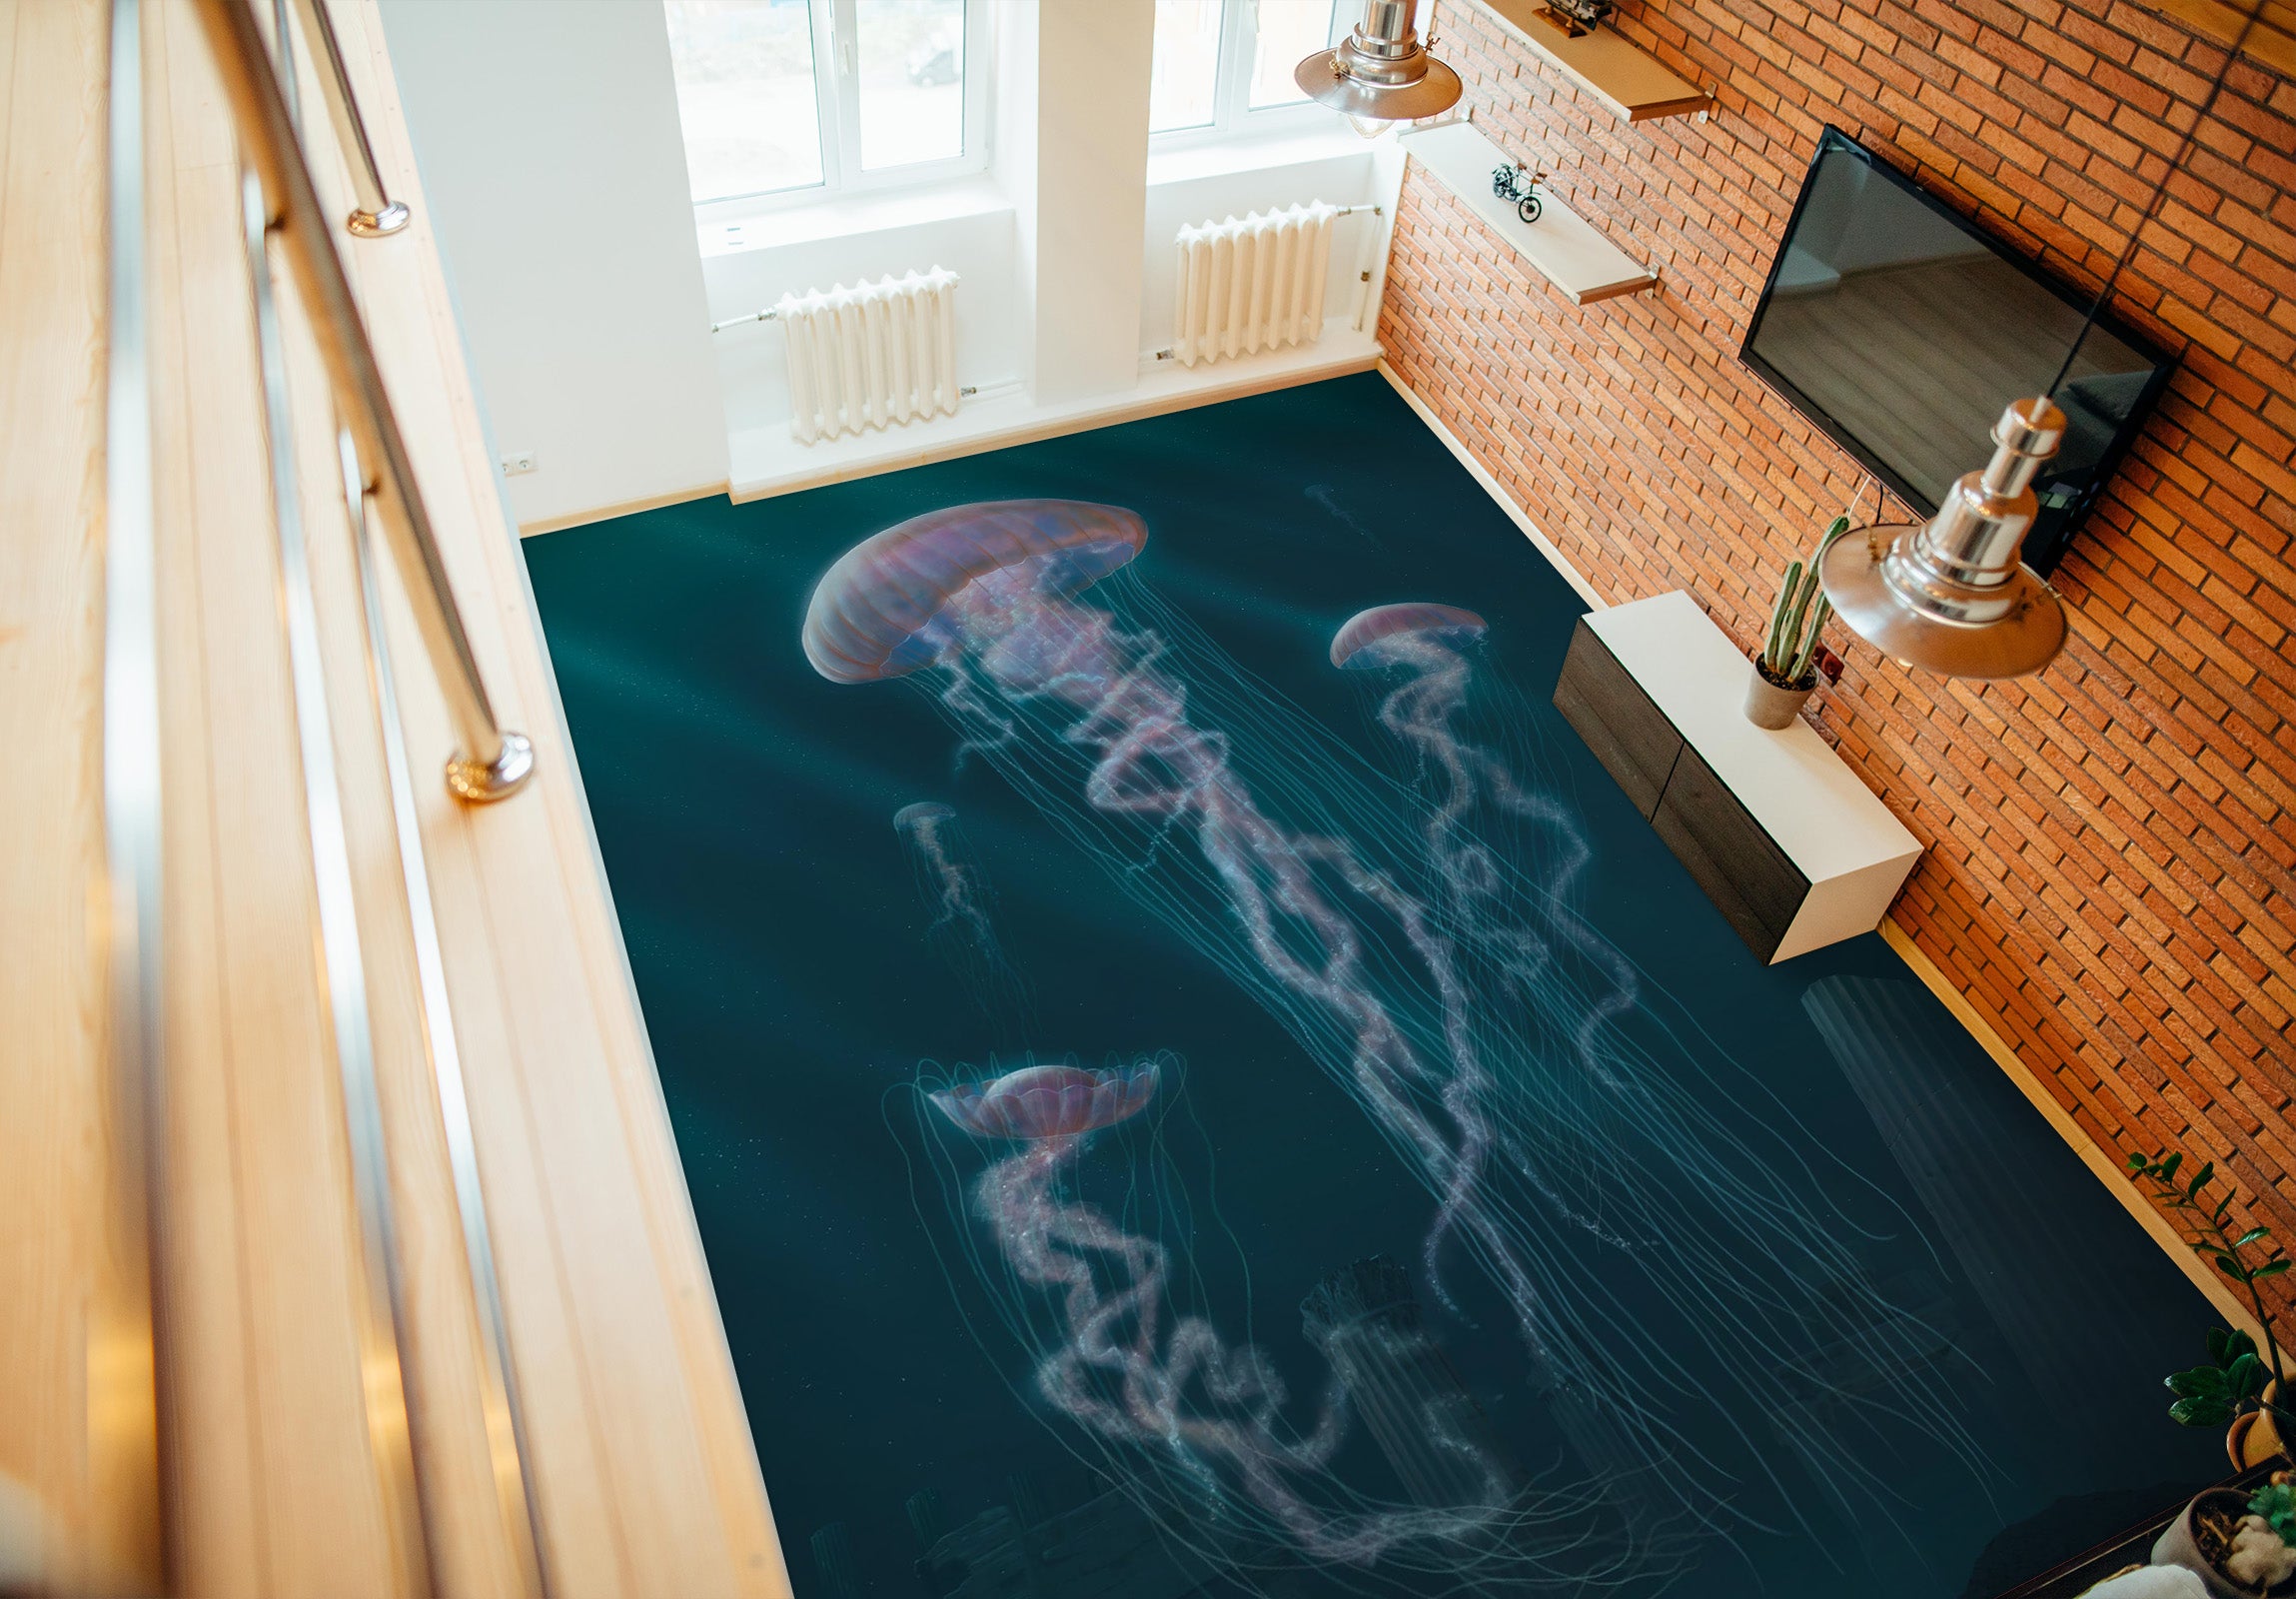 3D Jellyfish 98183 Vincent Floor Mural  Wallpaper Murals Self-Adhesive Removable Print Epoxy